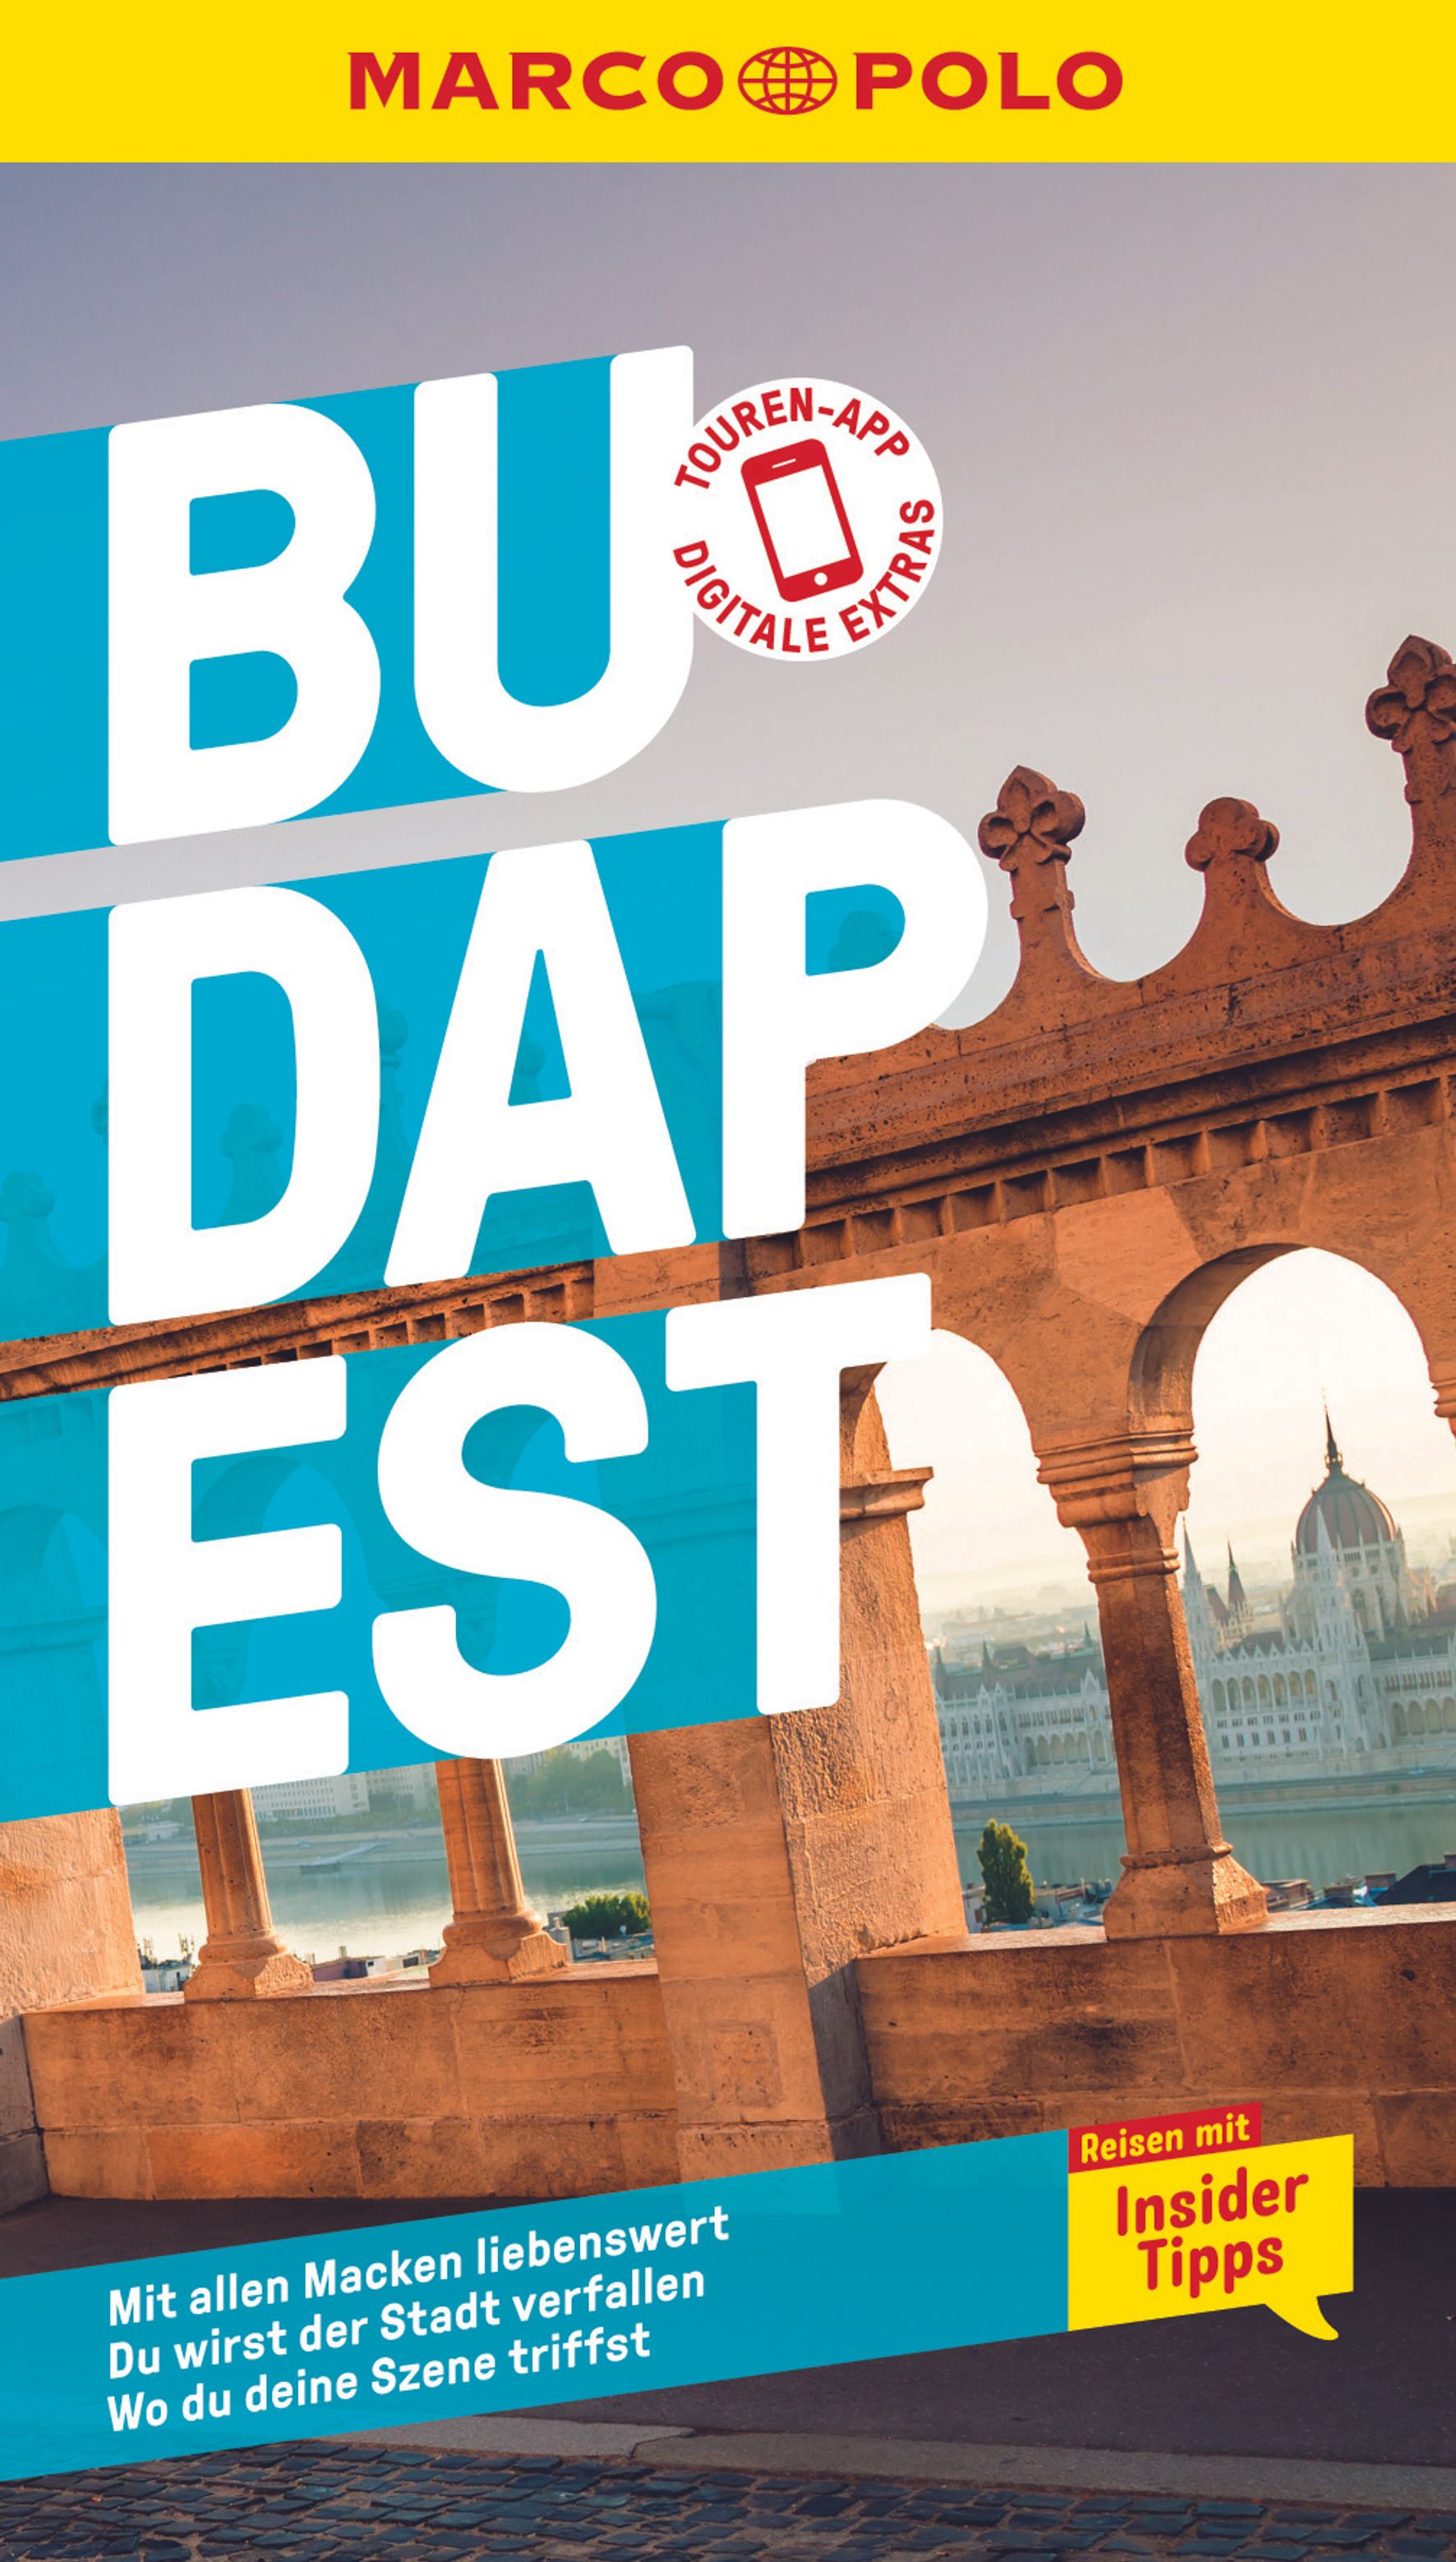 MAIRDUMONT Budapest (eBook)